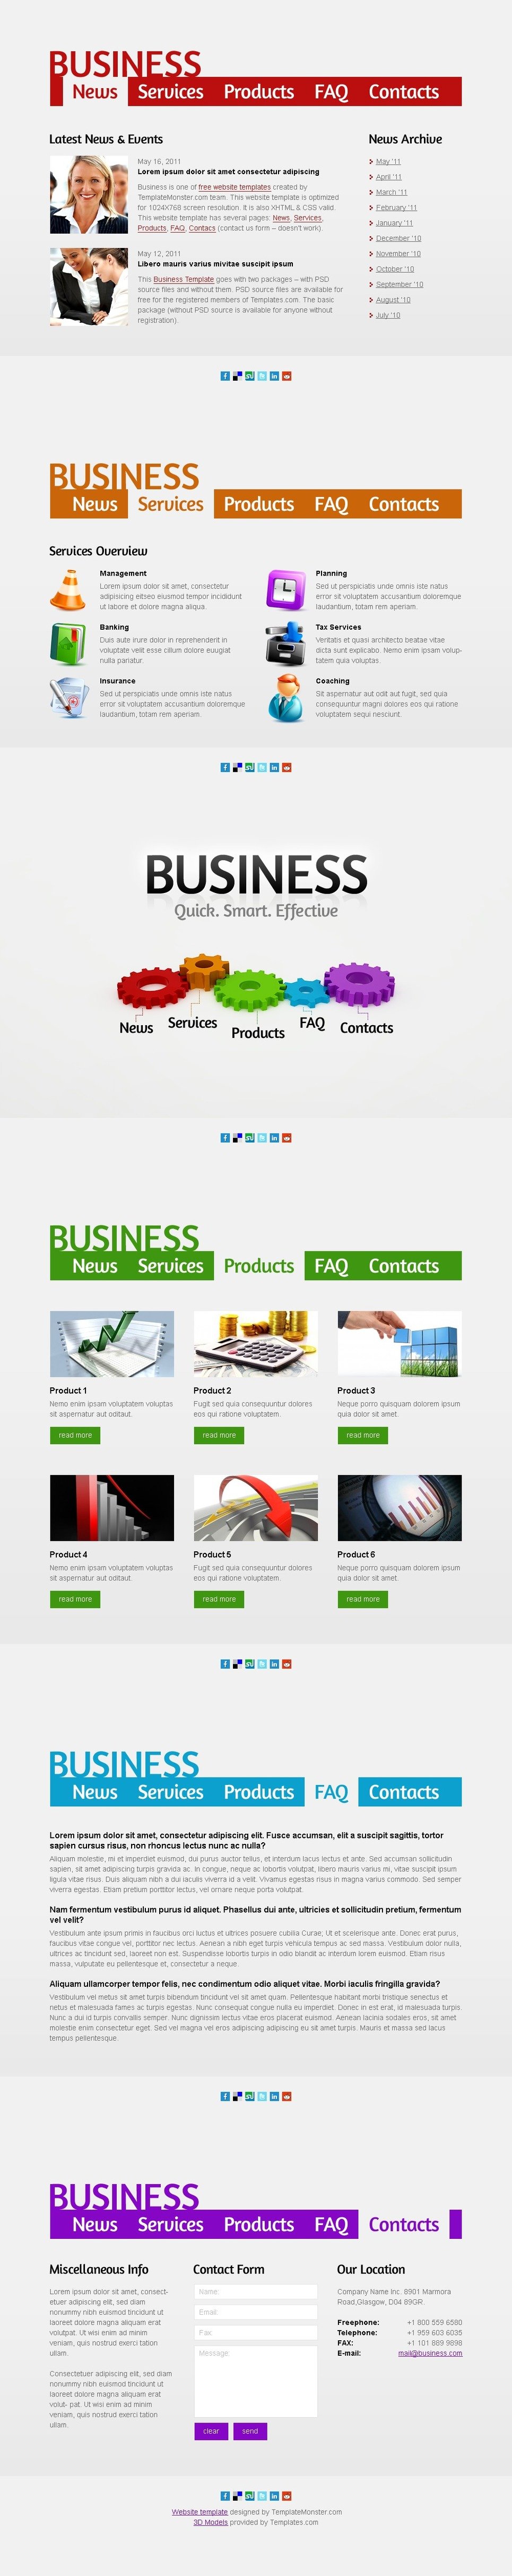 free-business-web-template-single-page-layout